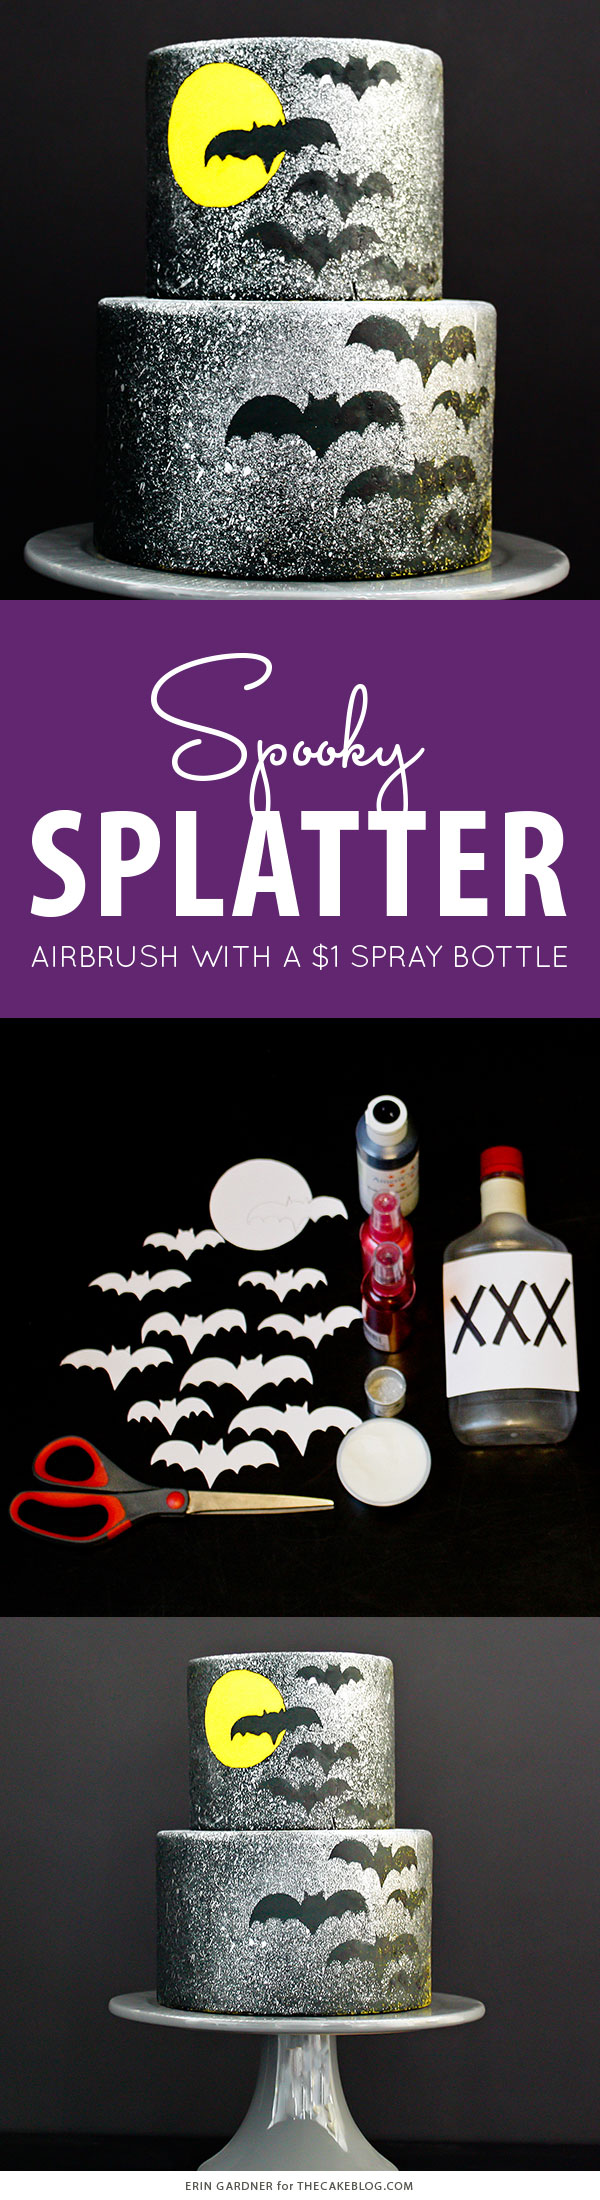 Spooky Splatter Halloween Cake - how to airbrush with a $1 spray bottle  |  Erin Gardner for TheCakeBlog.com